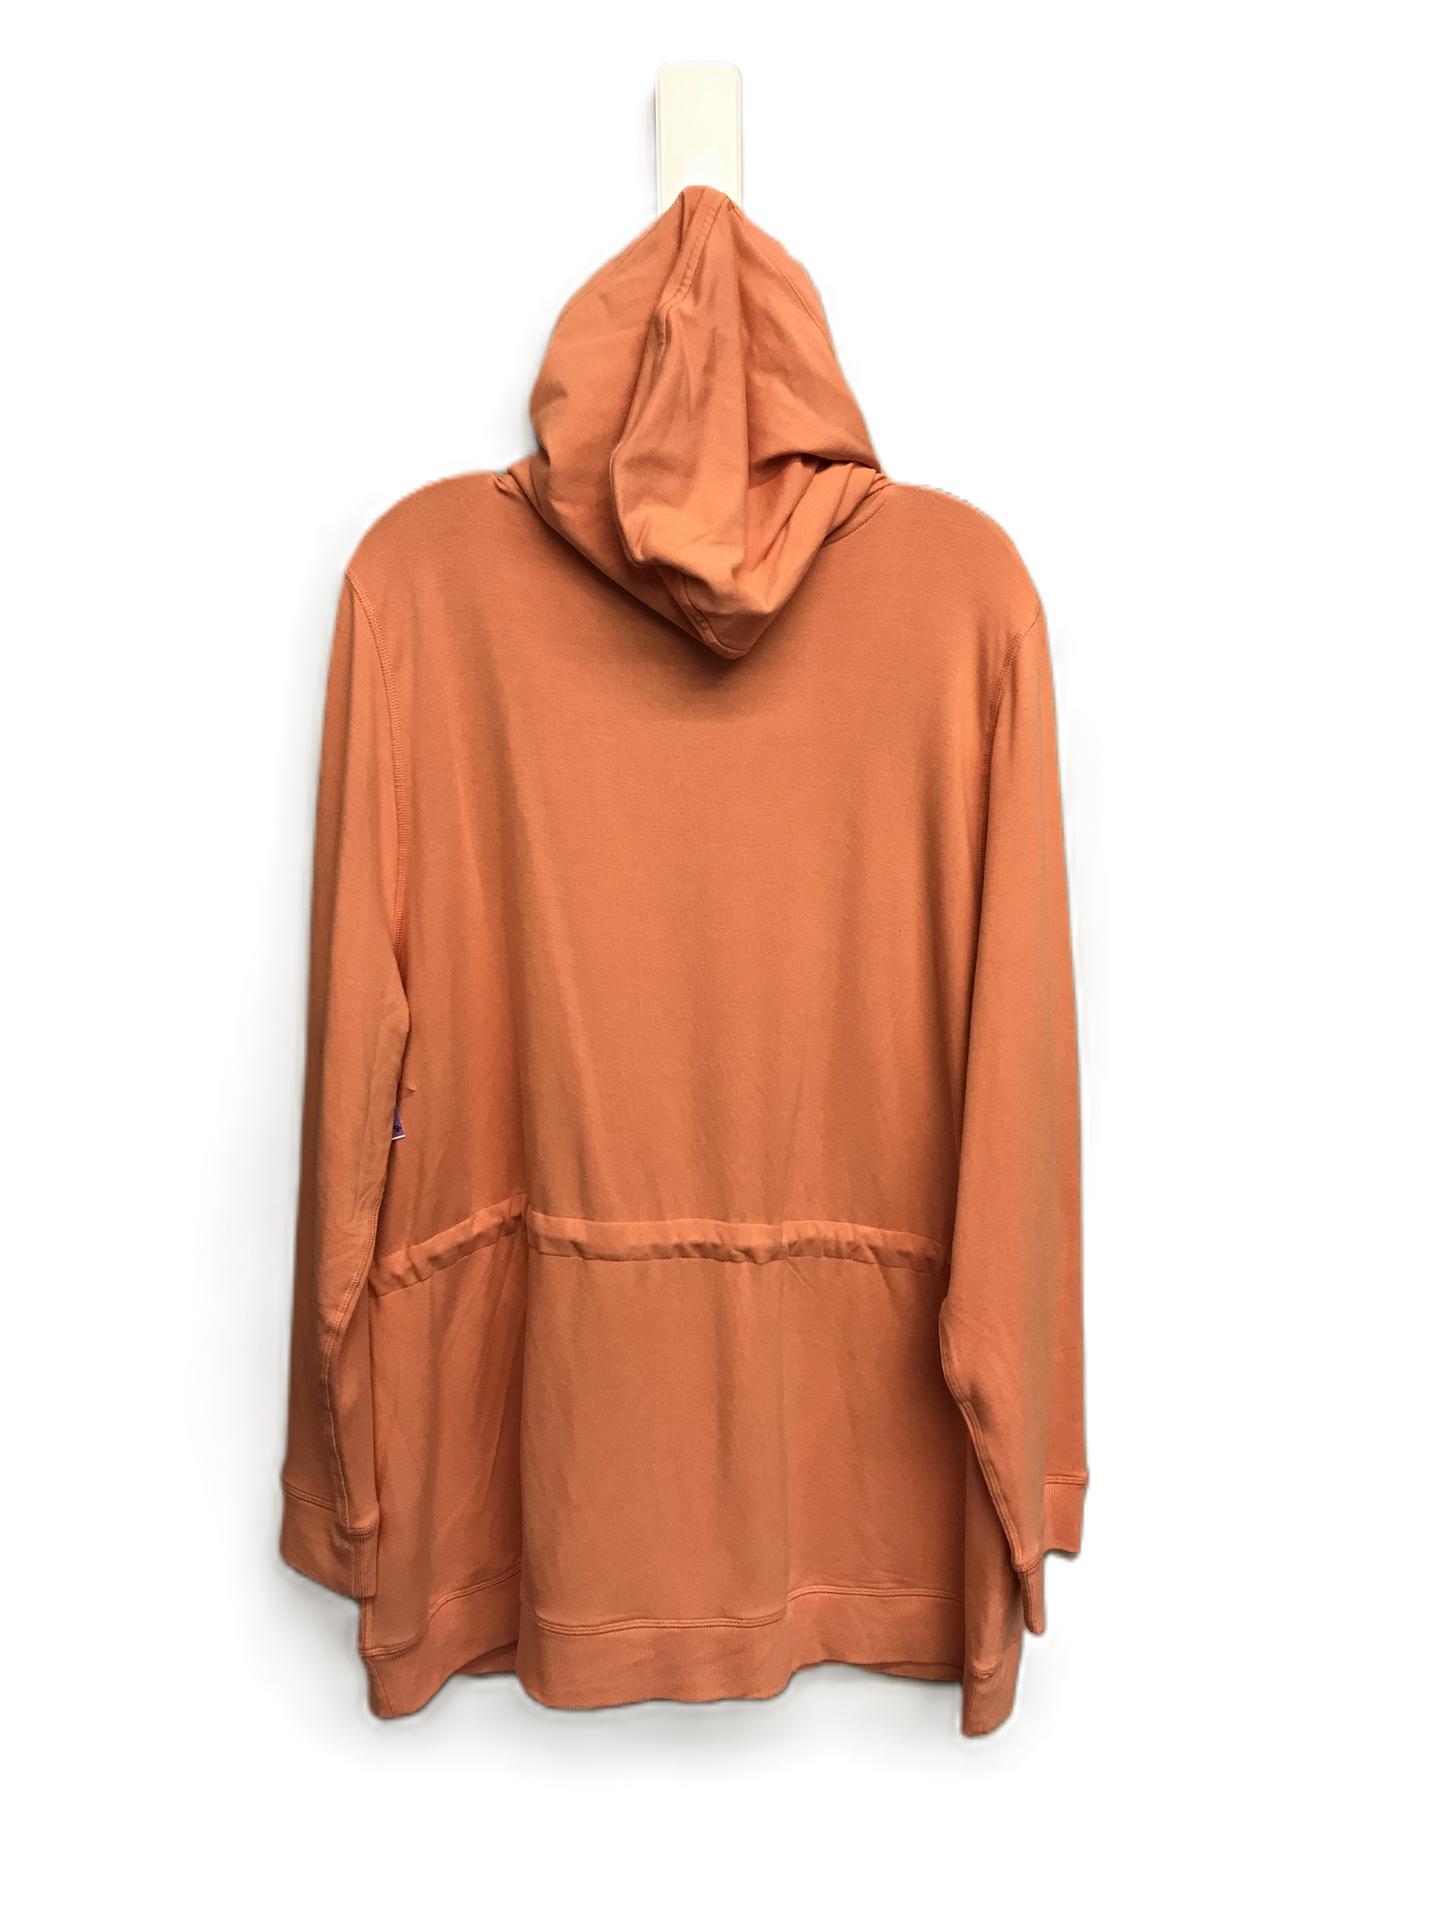 Orange Jacket Other By Soft Surroundings, Size: 1x